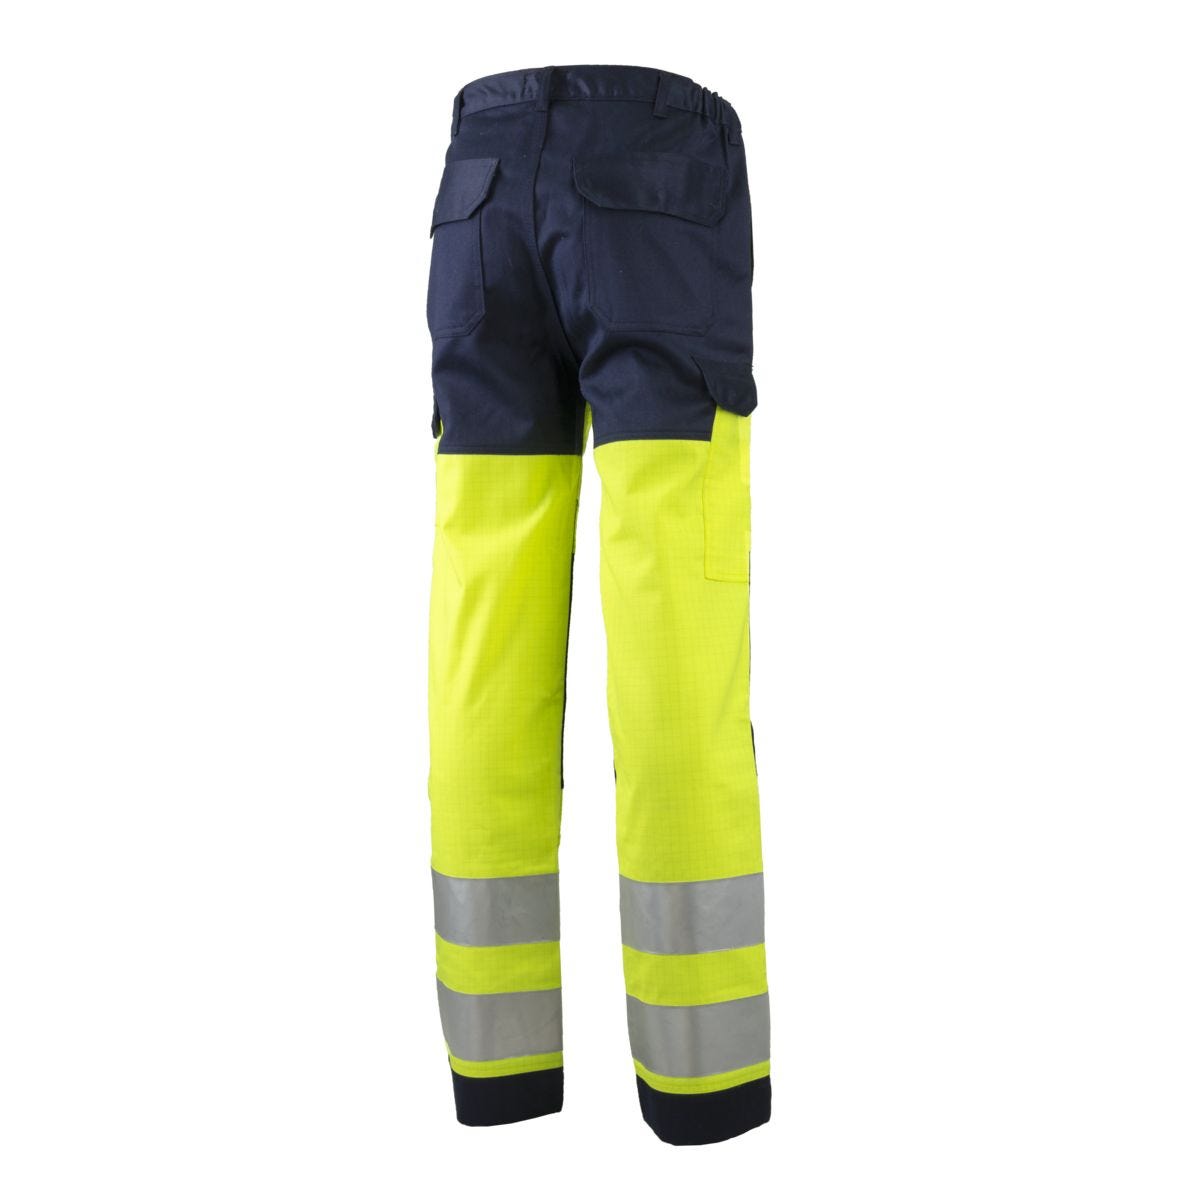 THOR Pantalon multirisques + bandes, 300g/m², jaune HV/marine - COVERGUARD - Taille M 1